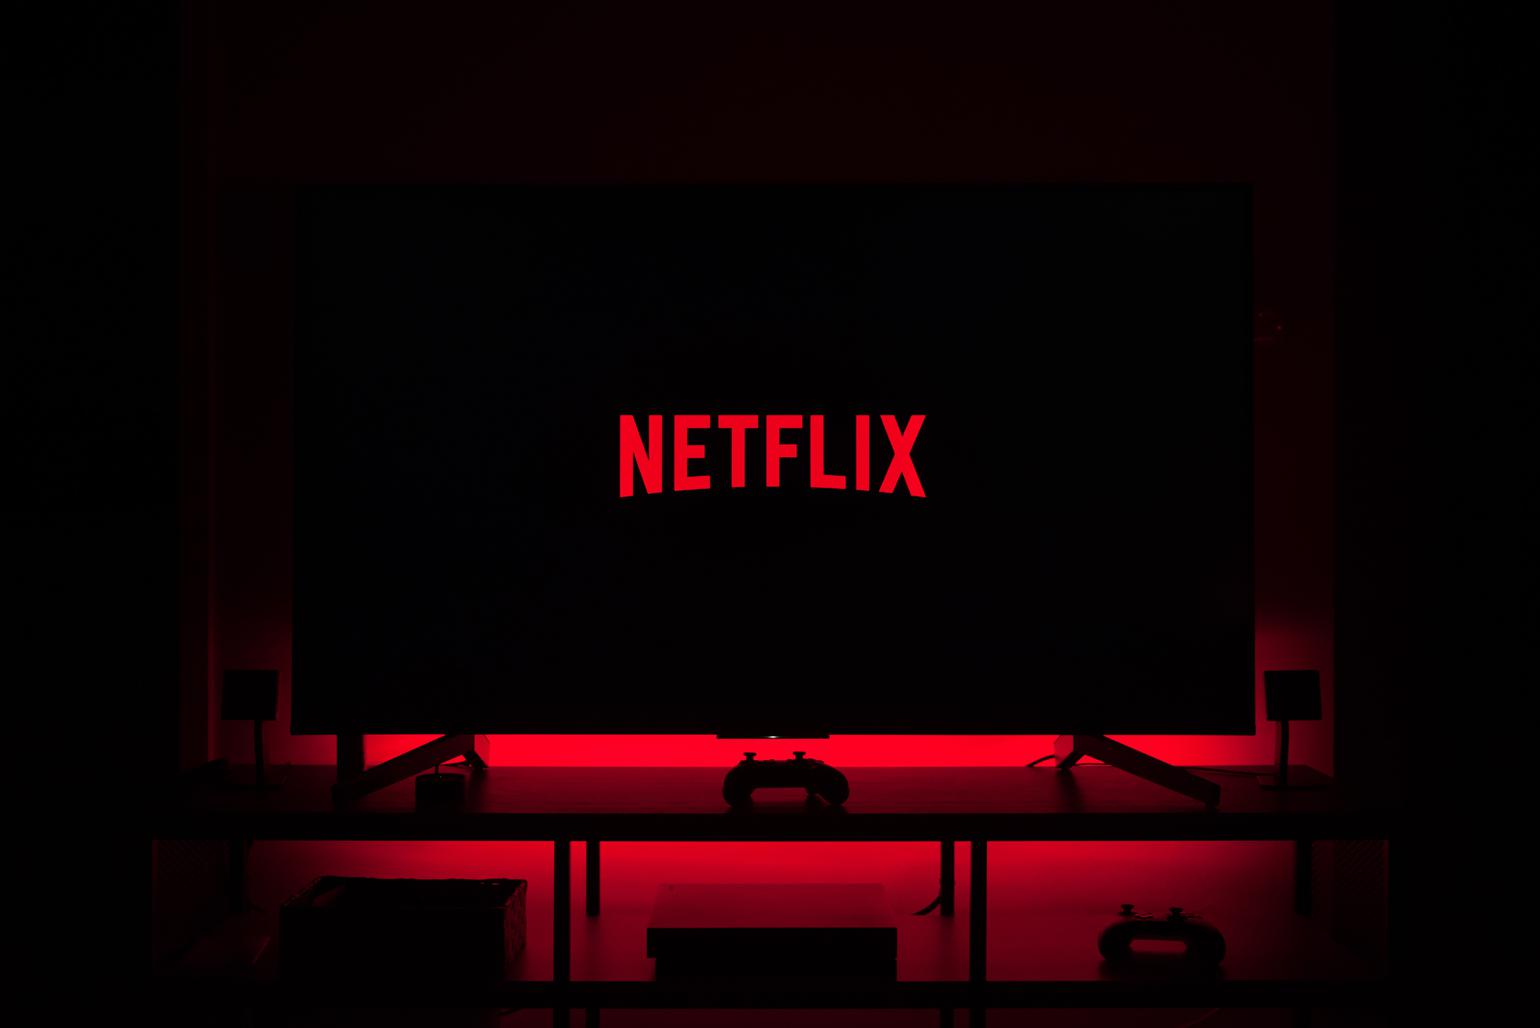 Netflix logo in a moody setting